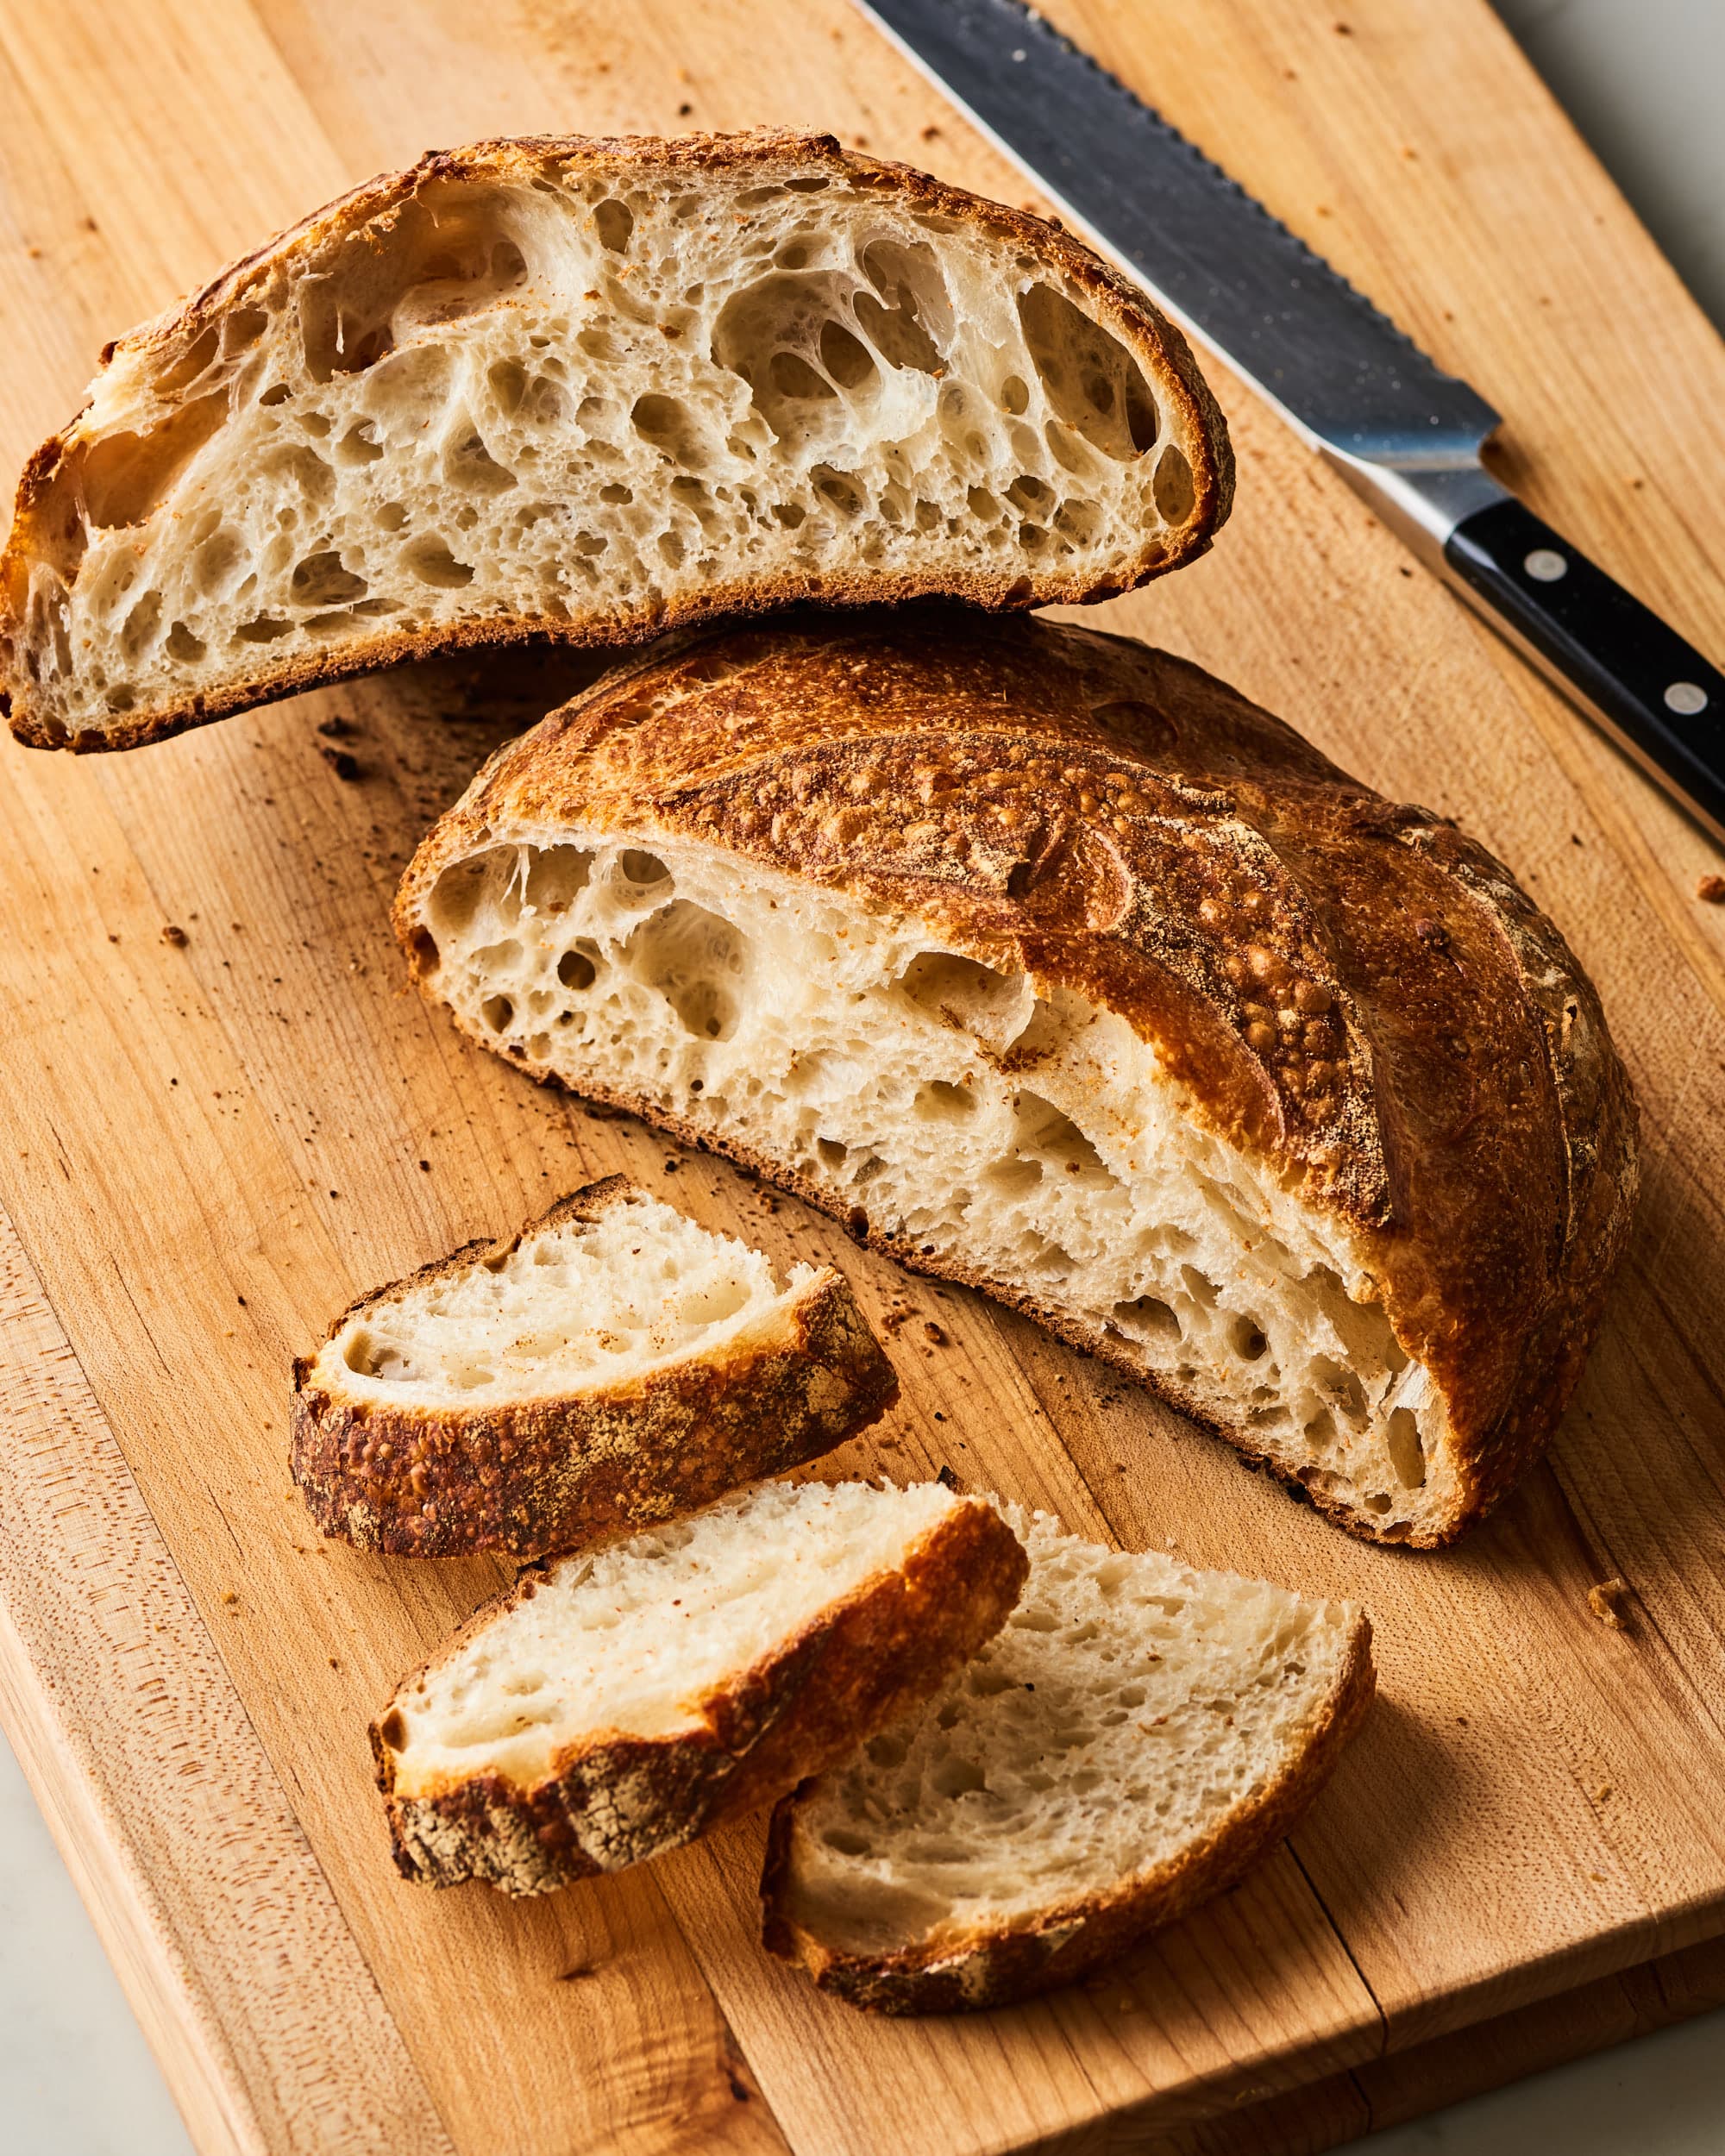 https://cdn.apartmenttherapy.info/image/upload/v1579298800/k/Photo/Recipes/2020-01-How-to-Sourdough-Bread/98877-sliced-lead_How-to-make-sourdough-bread.jpg